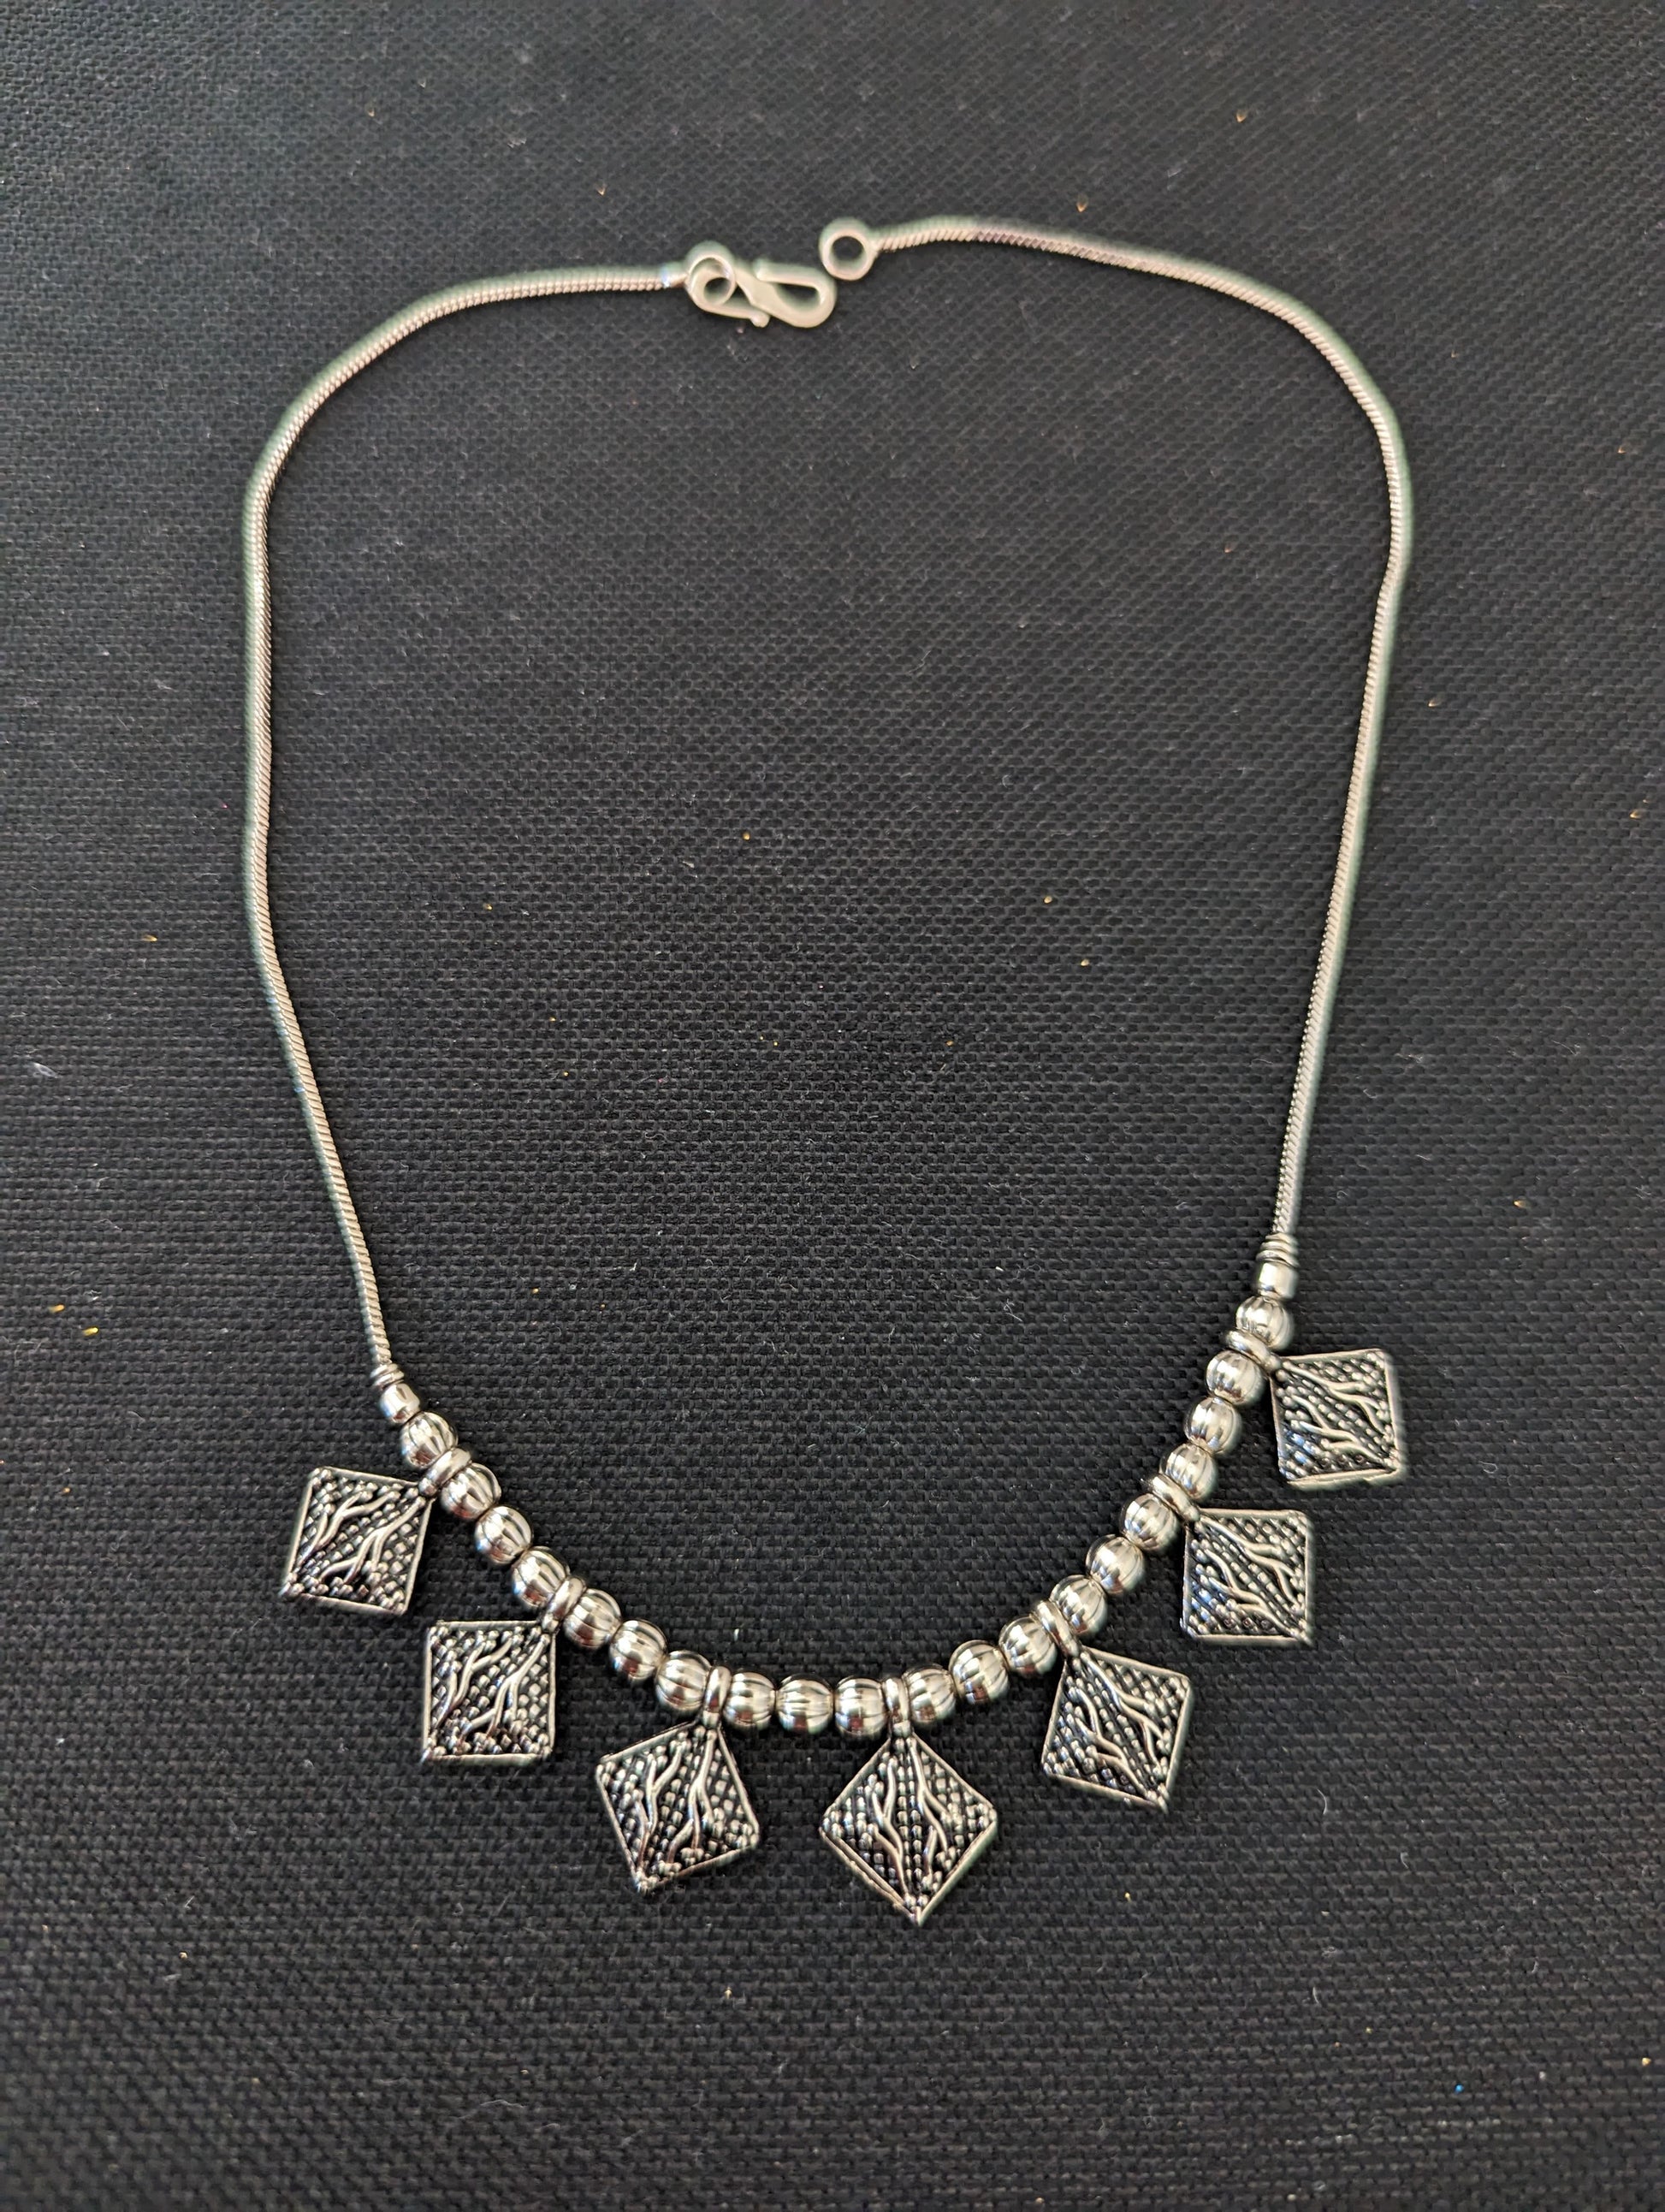 Oxidized silver Charm choker Necklace - Simpliful